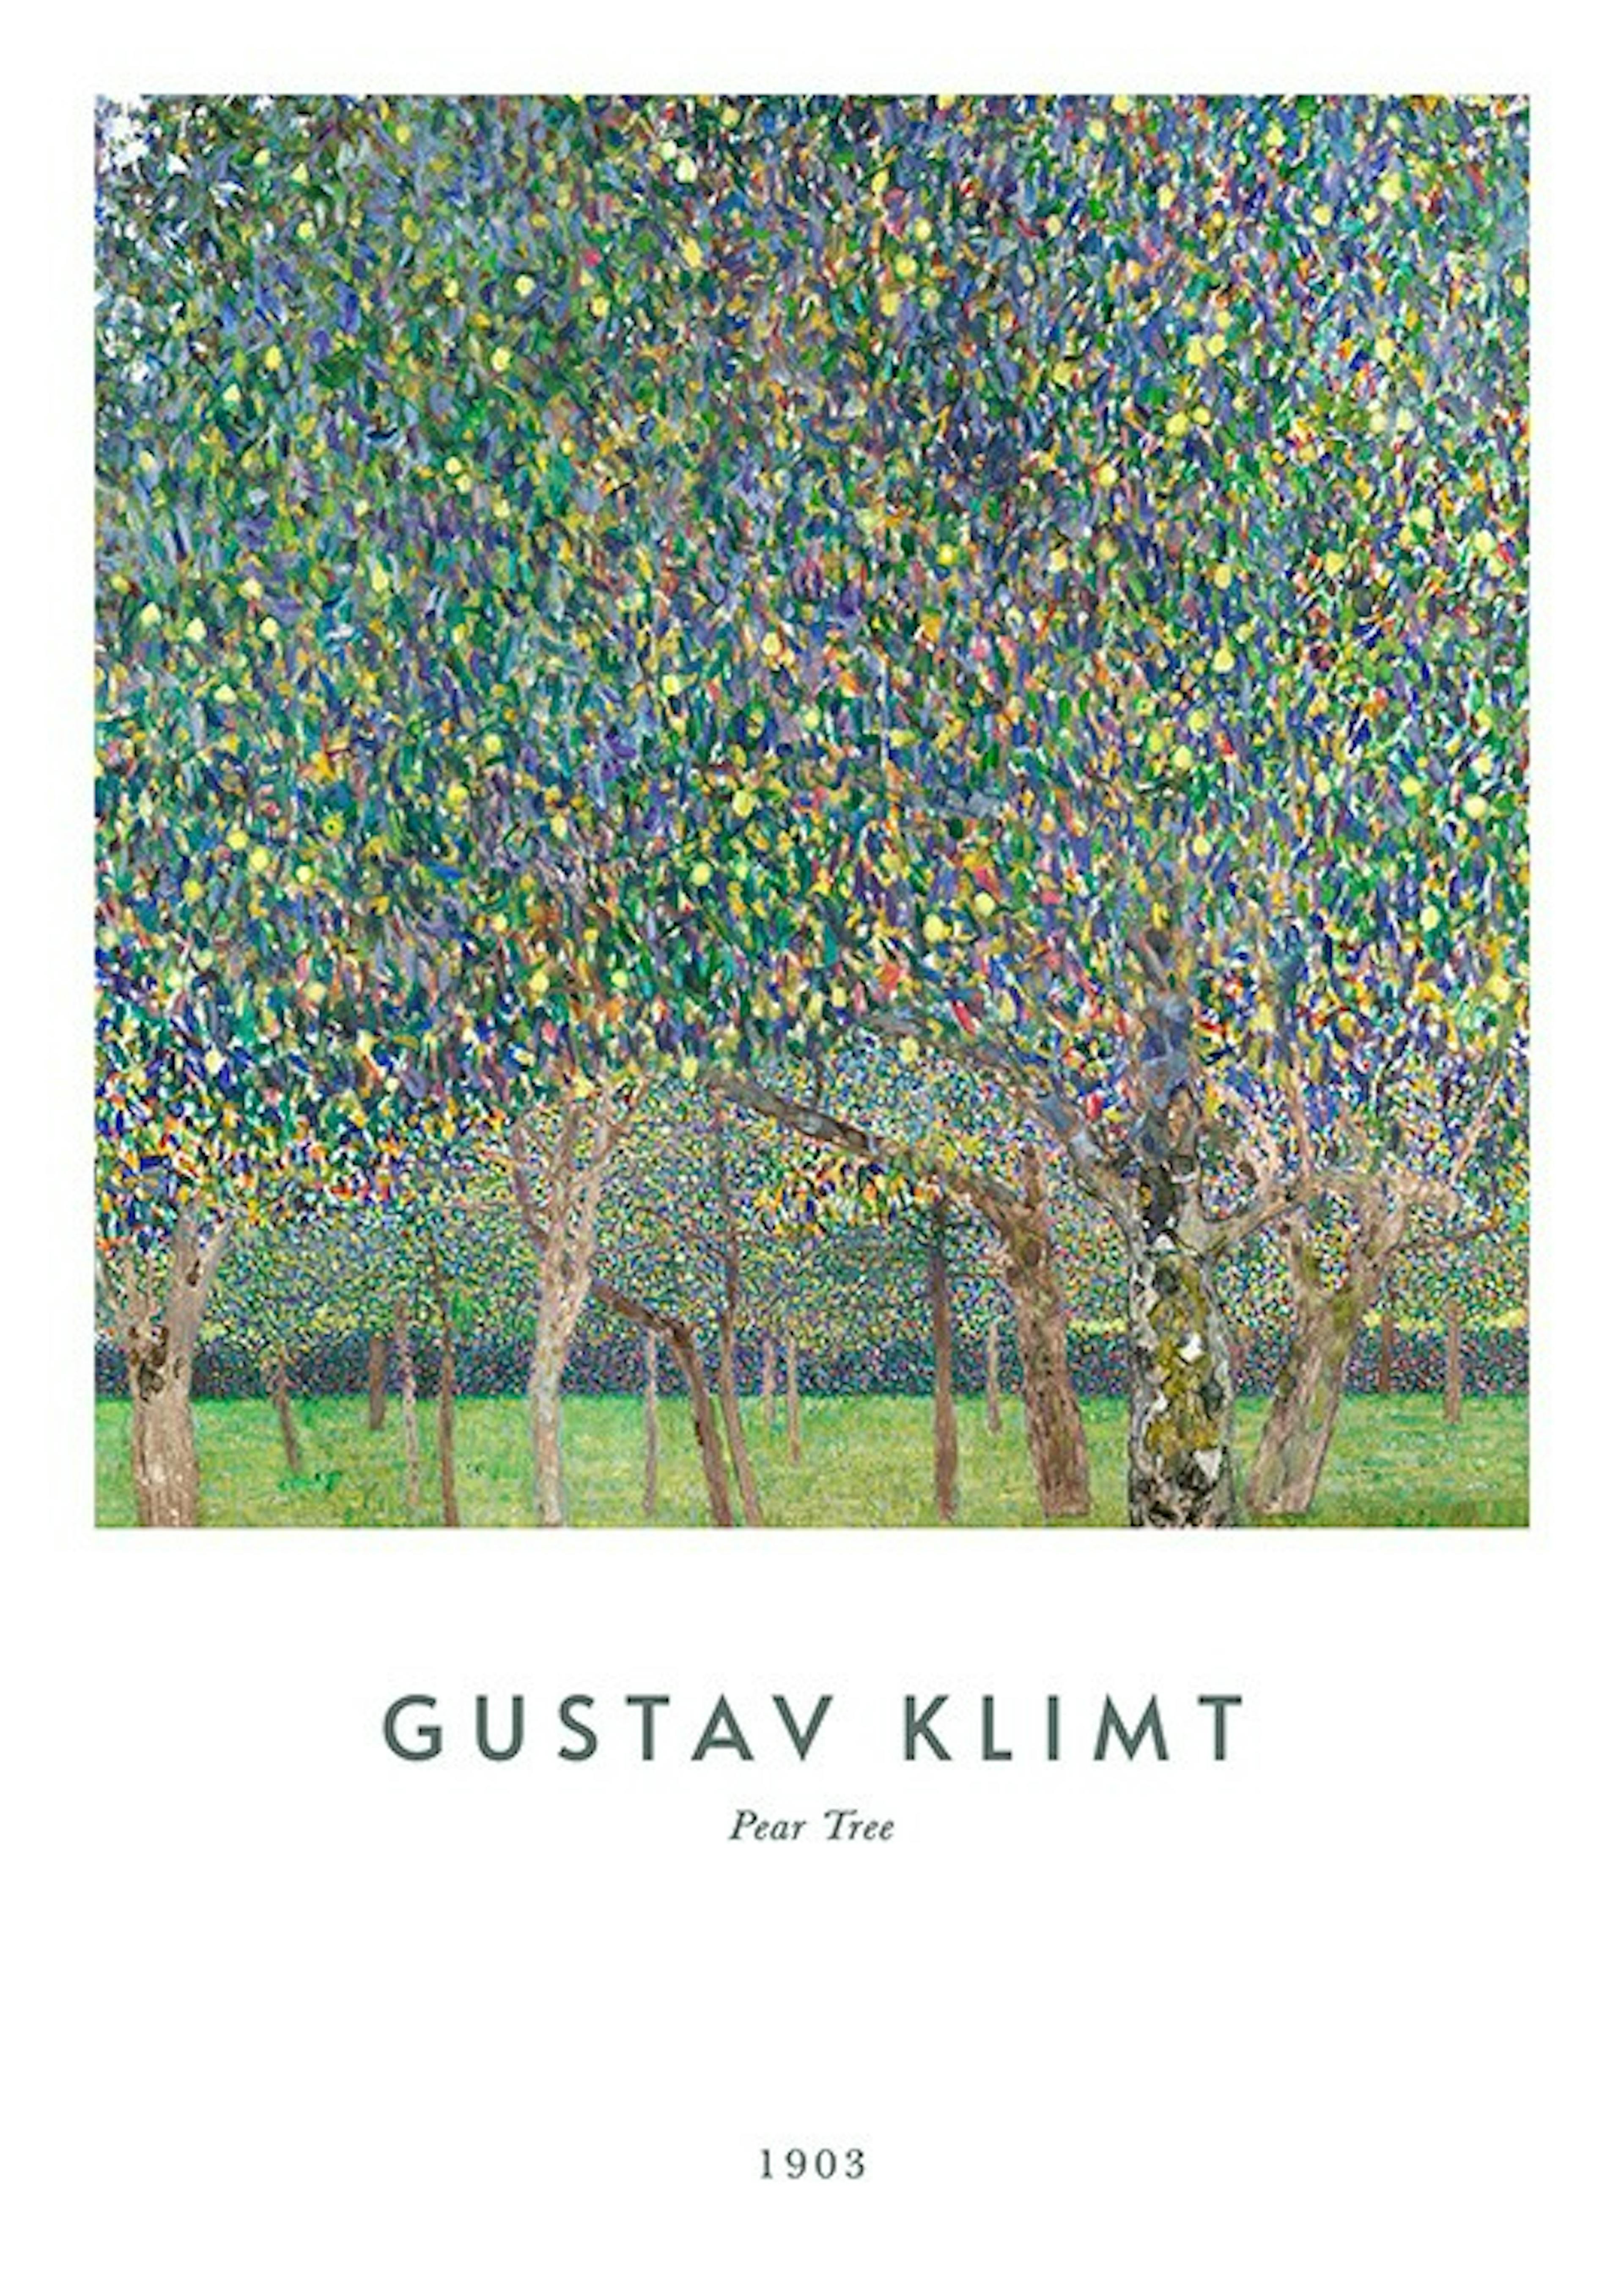 Gustav Klimt - Pear Tree Print 0